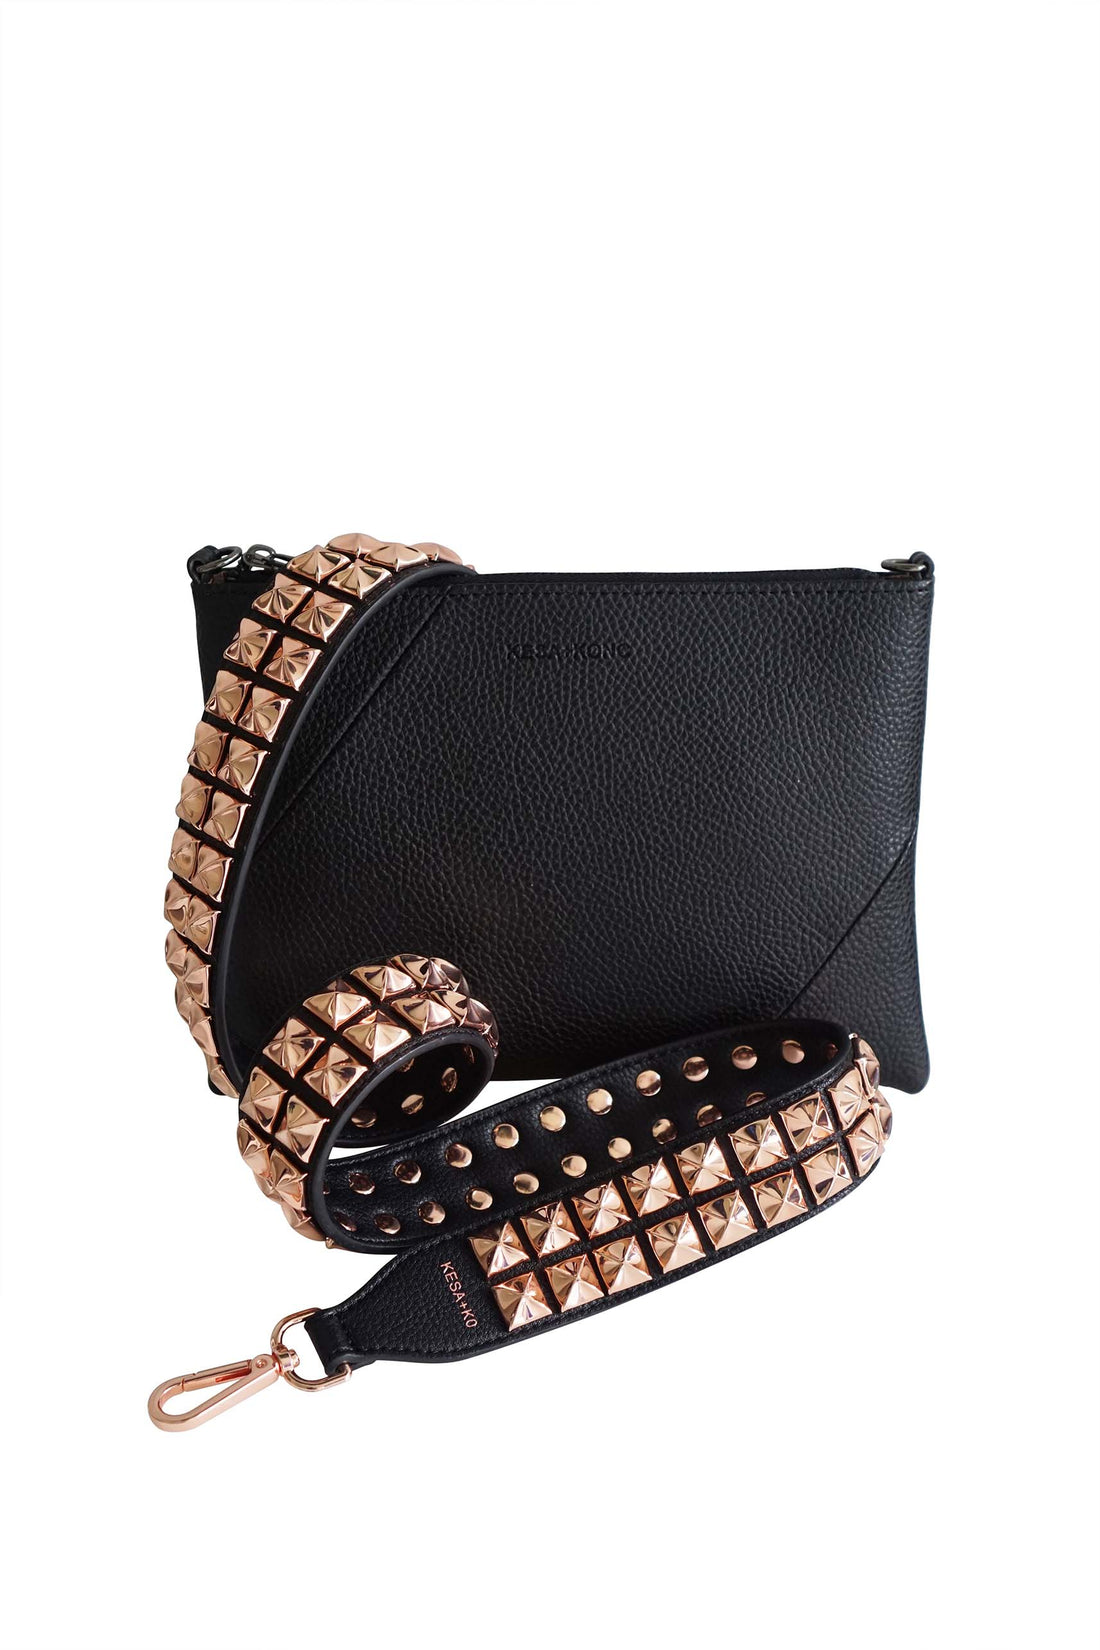 Warm Gold studded bag strap - Dalia Long length